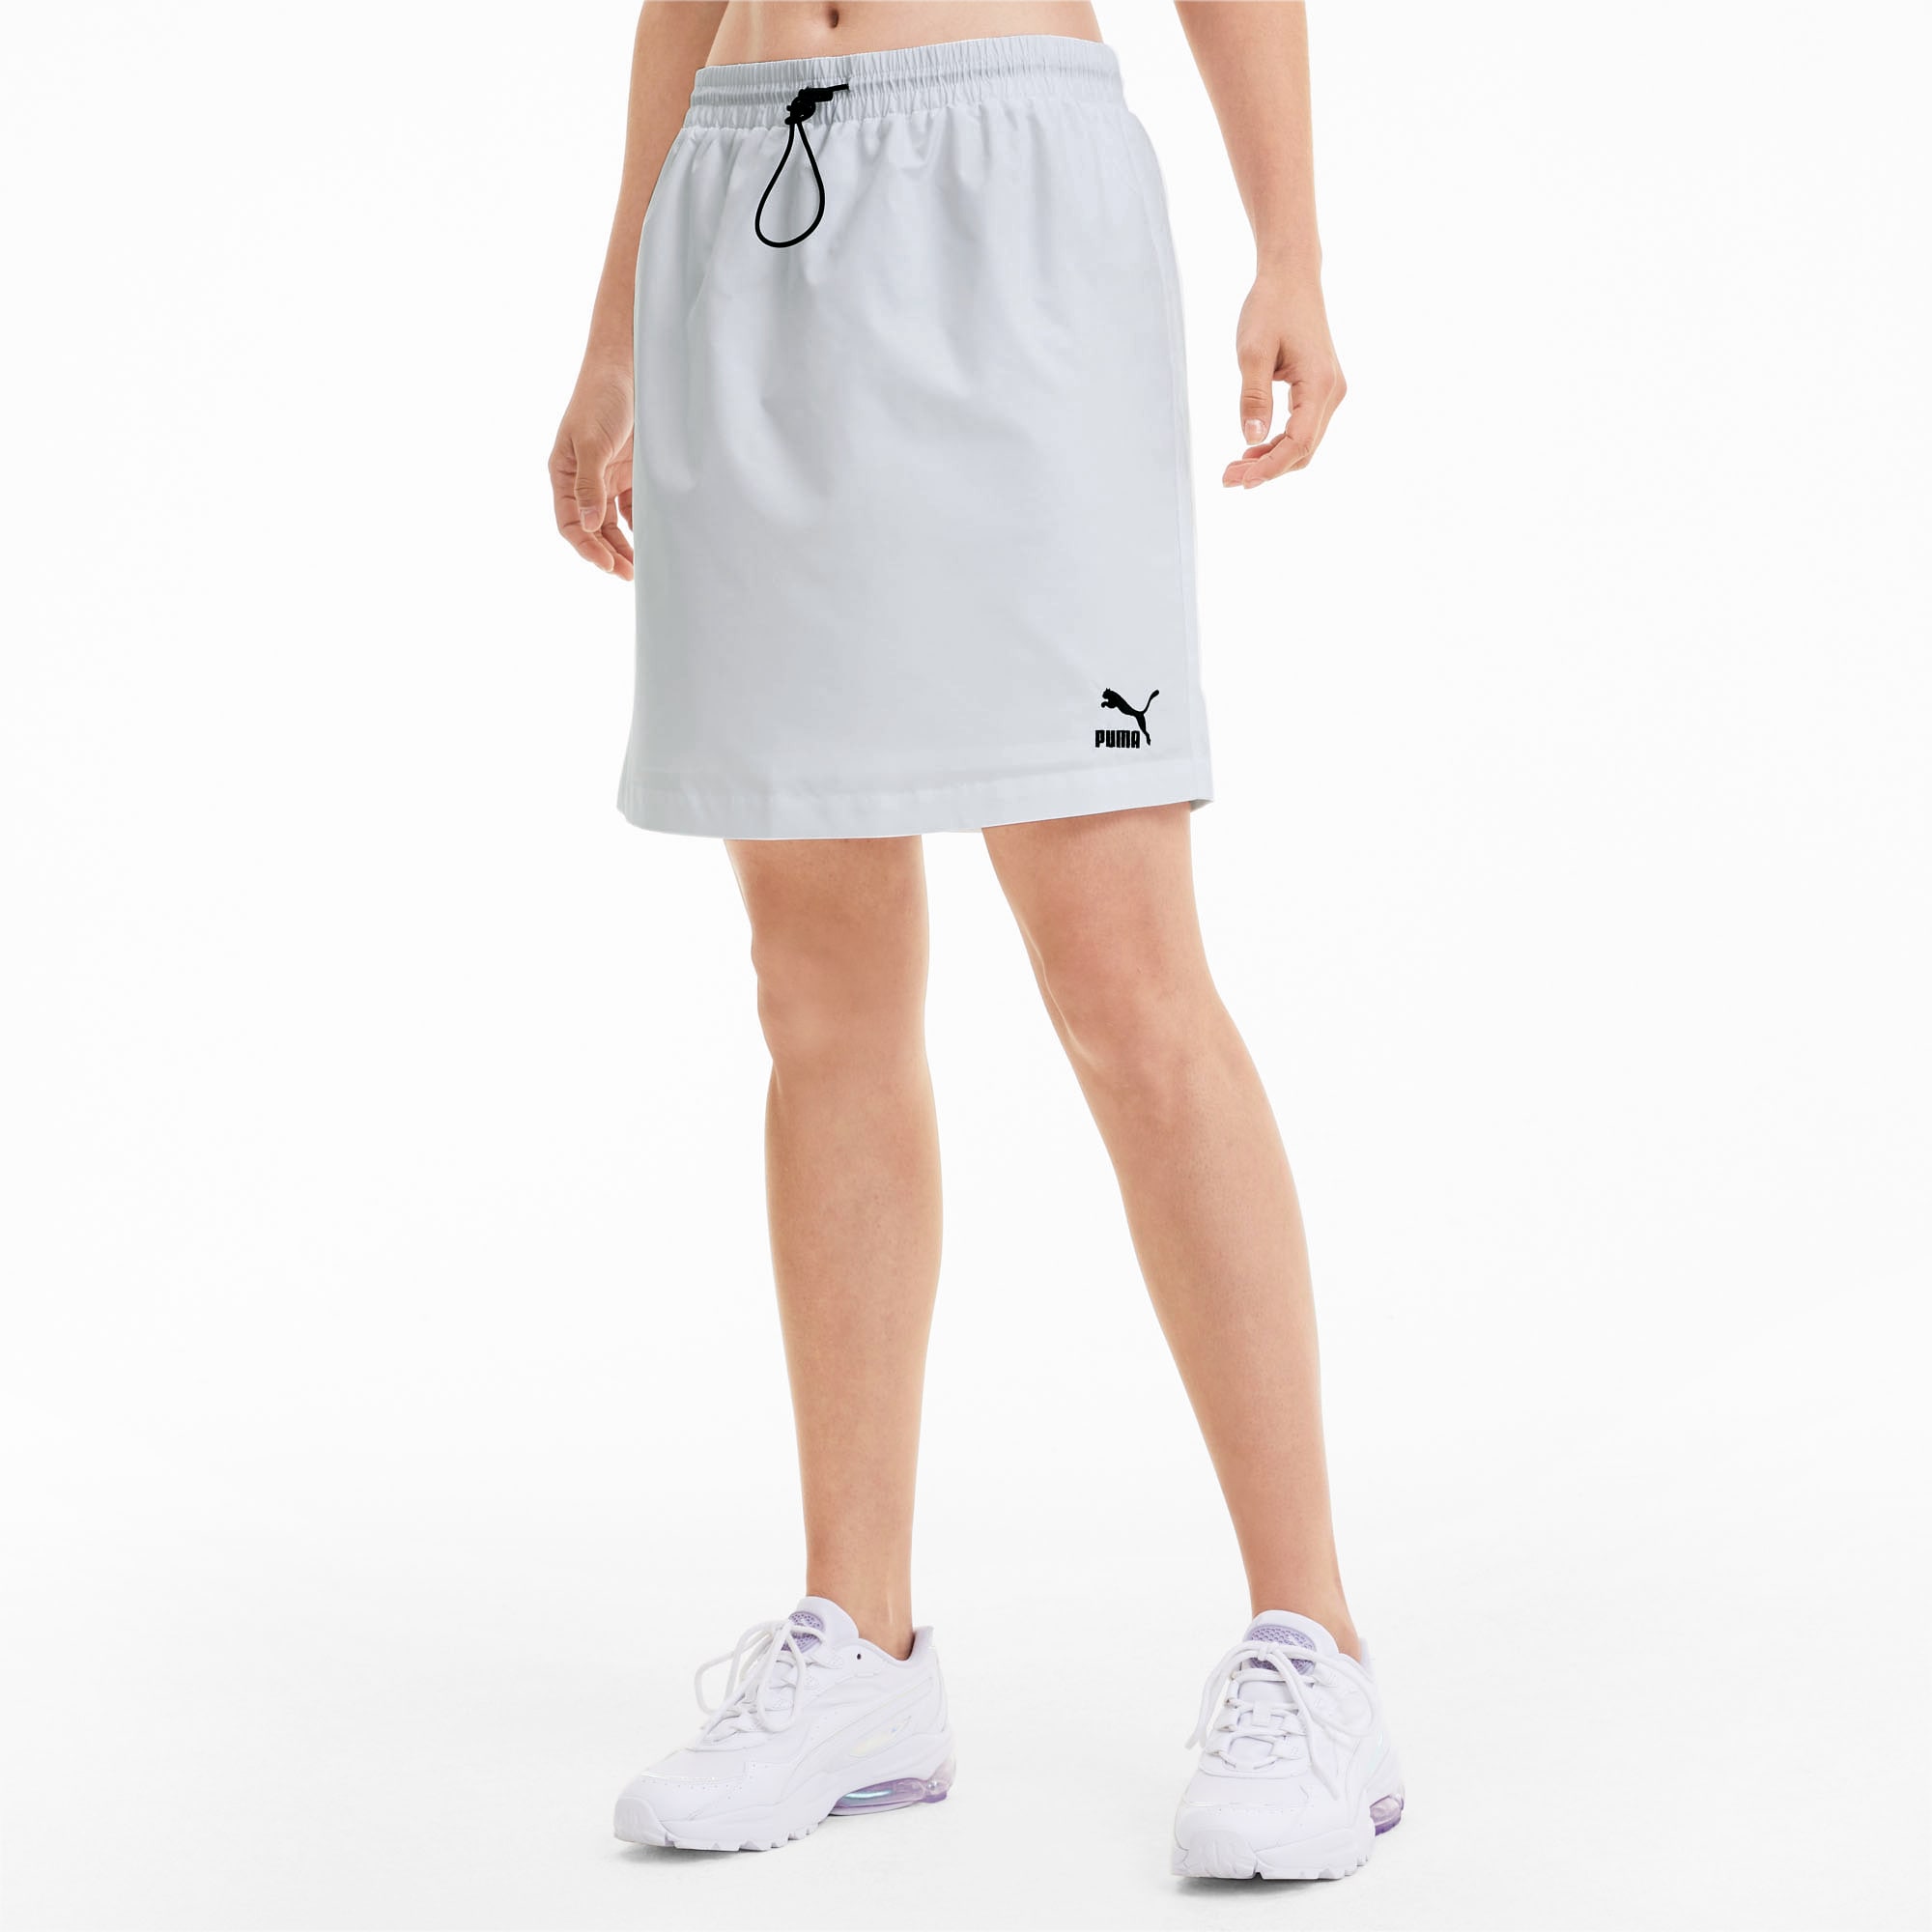 puma tennis skirt